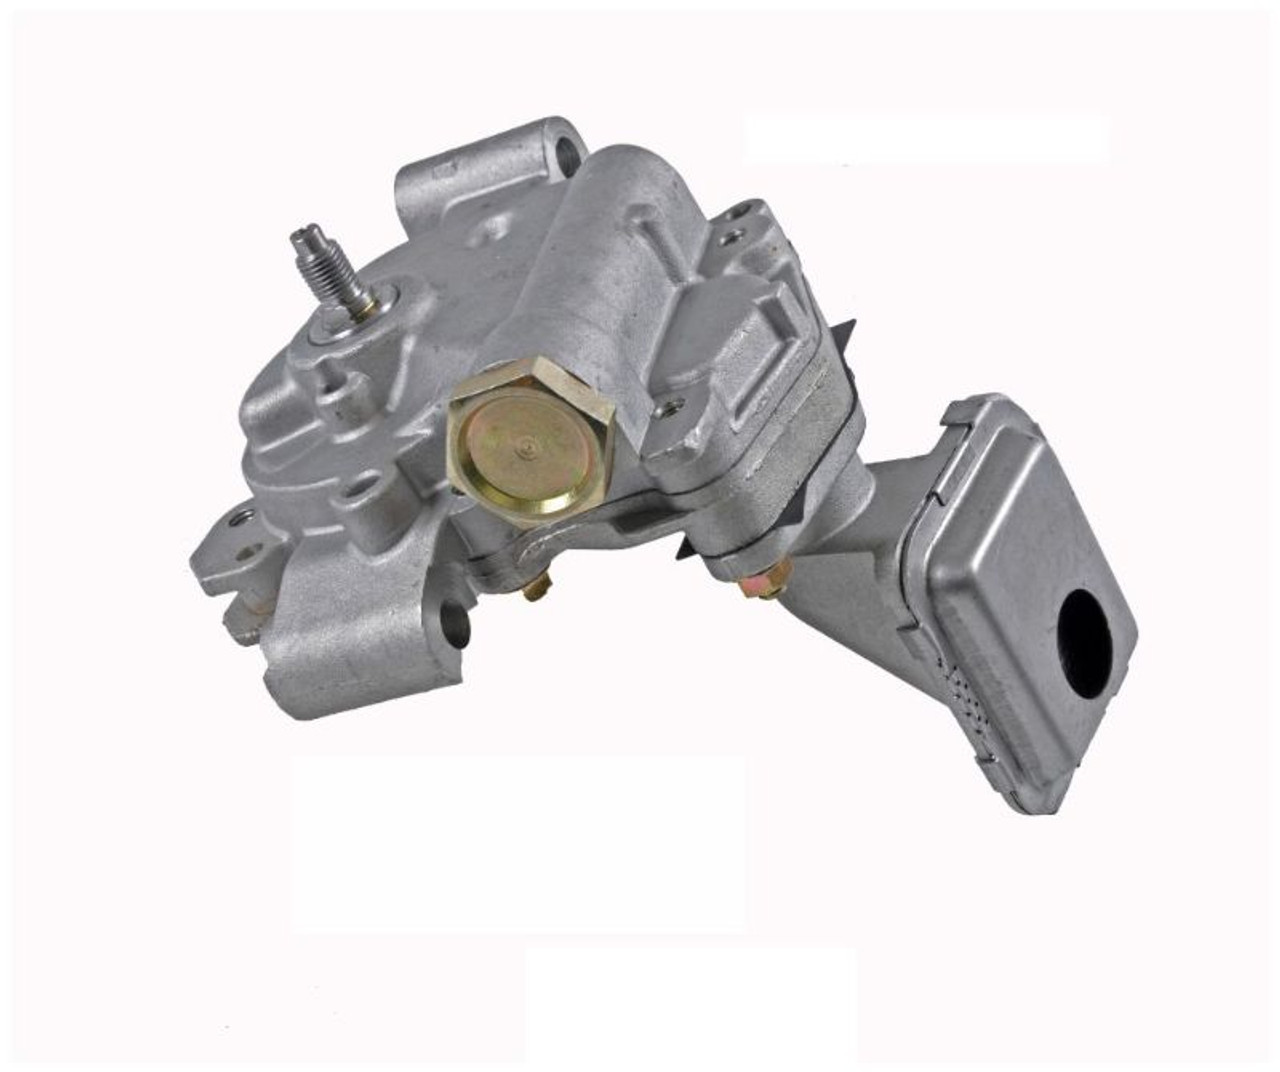 2012 Toyota Matrix 2.4L Engine Oil Pump EP044 -53